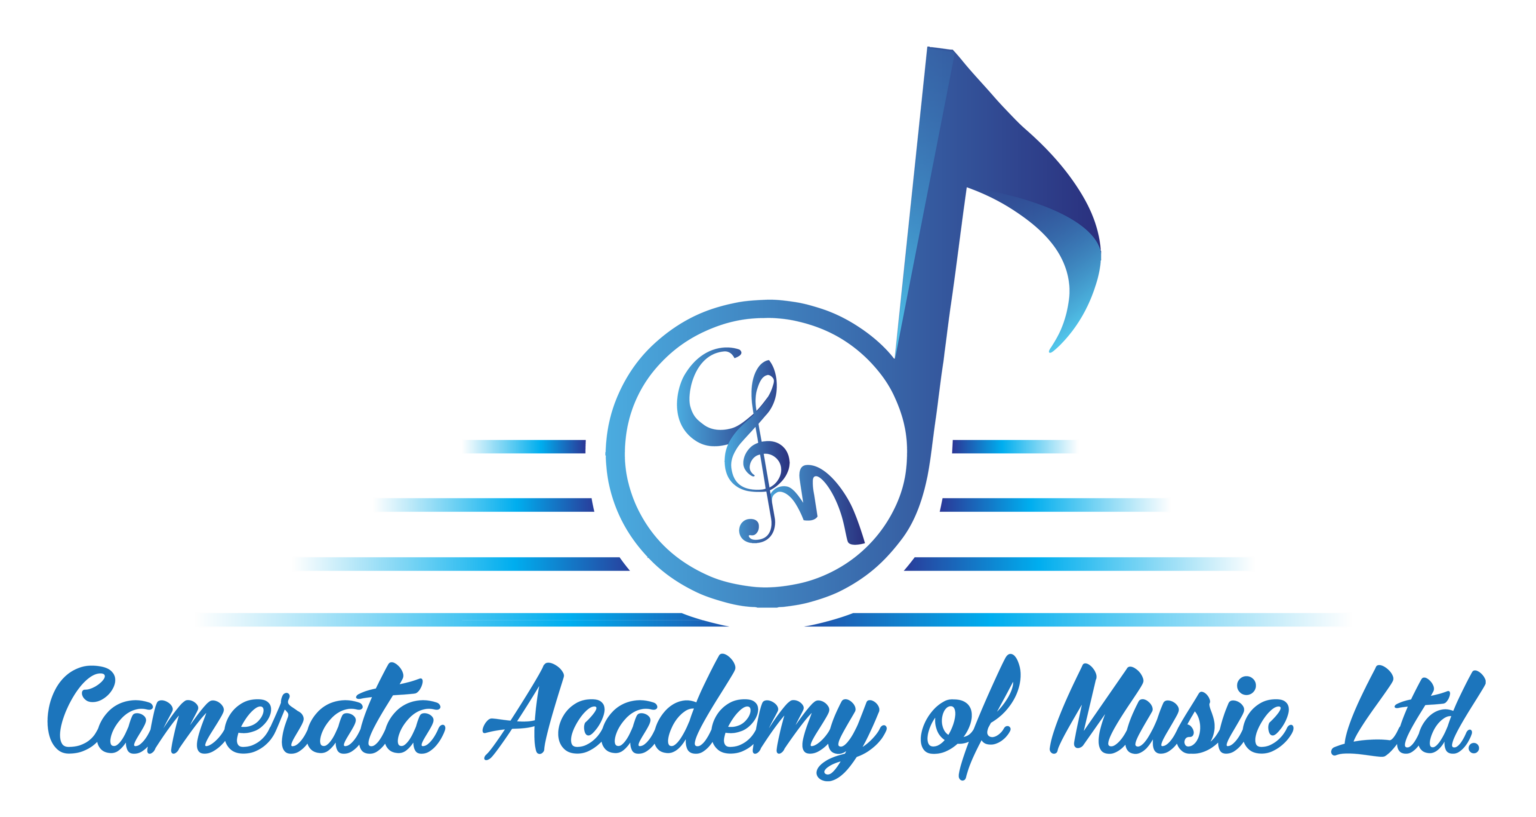 Camerata Academy of Music Logo